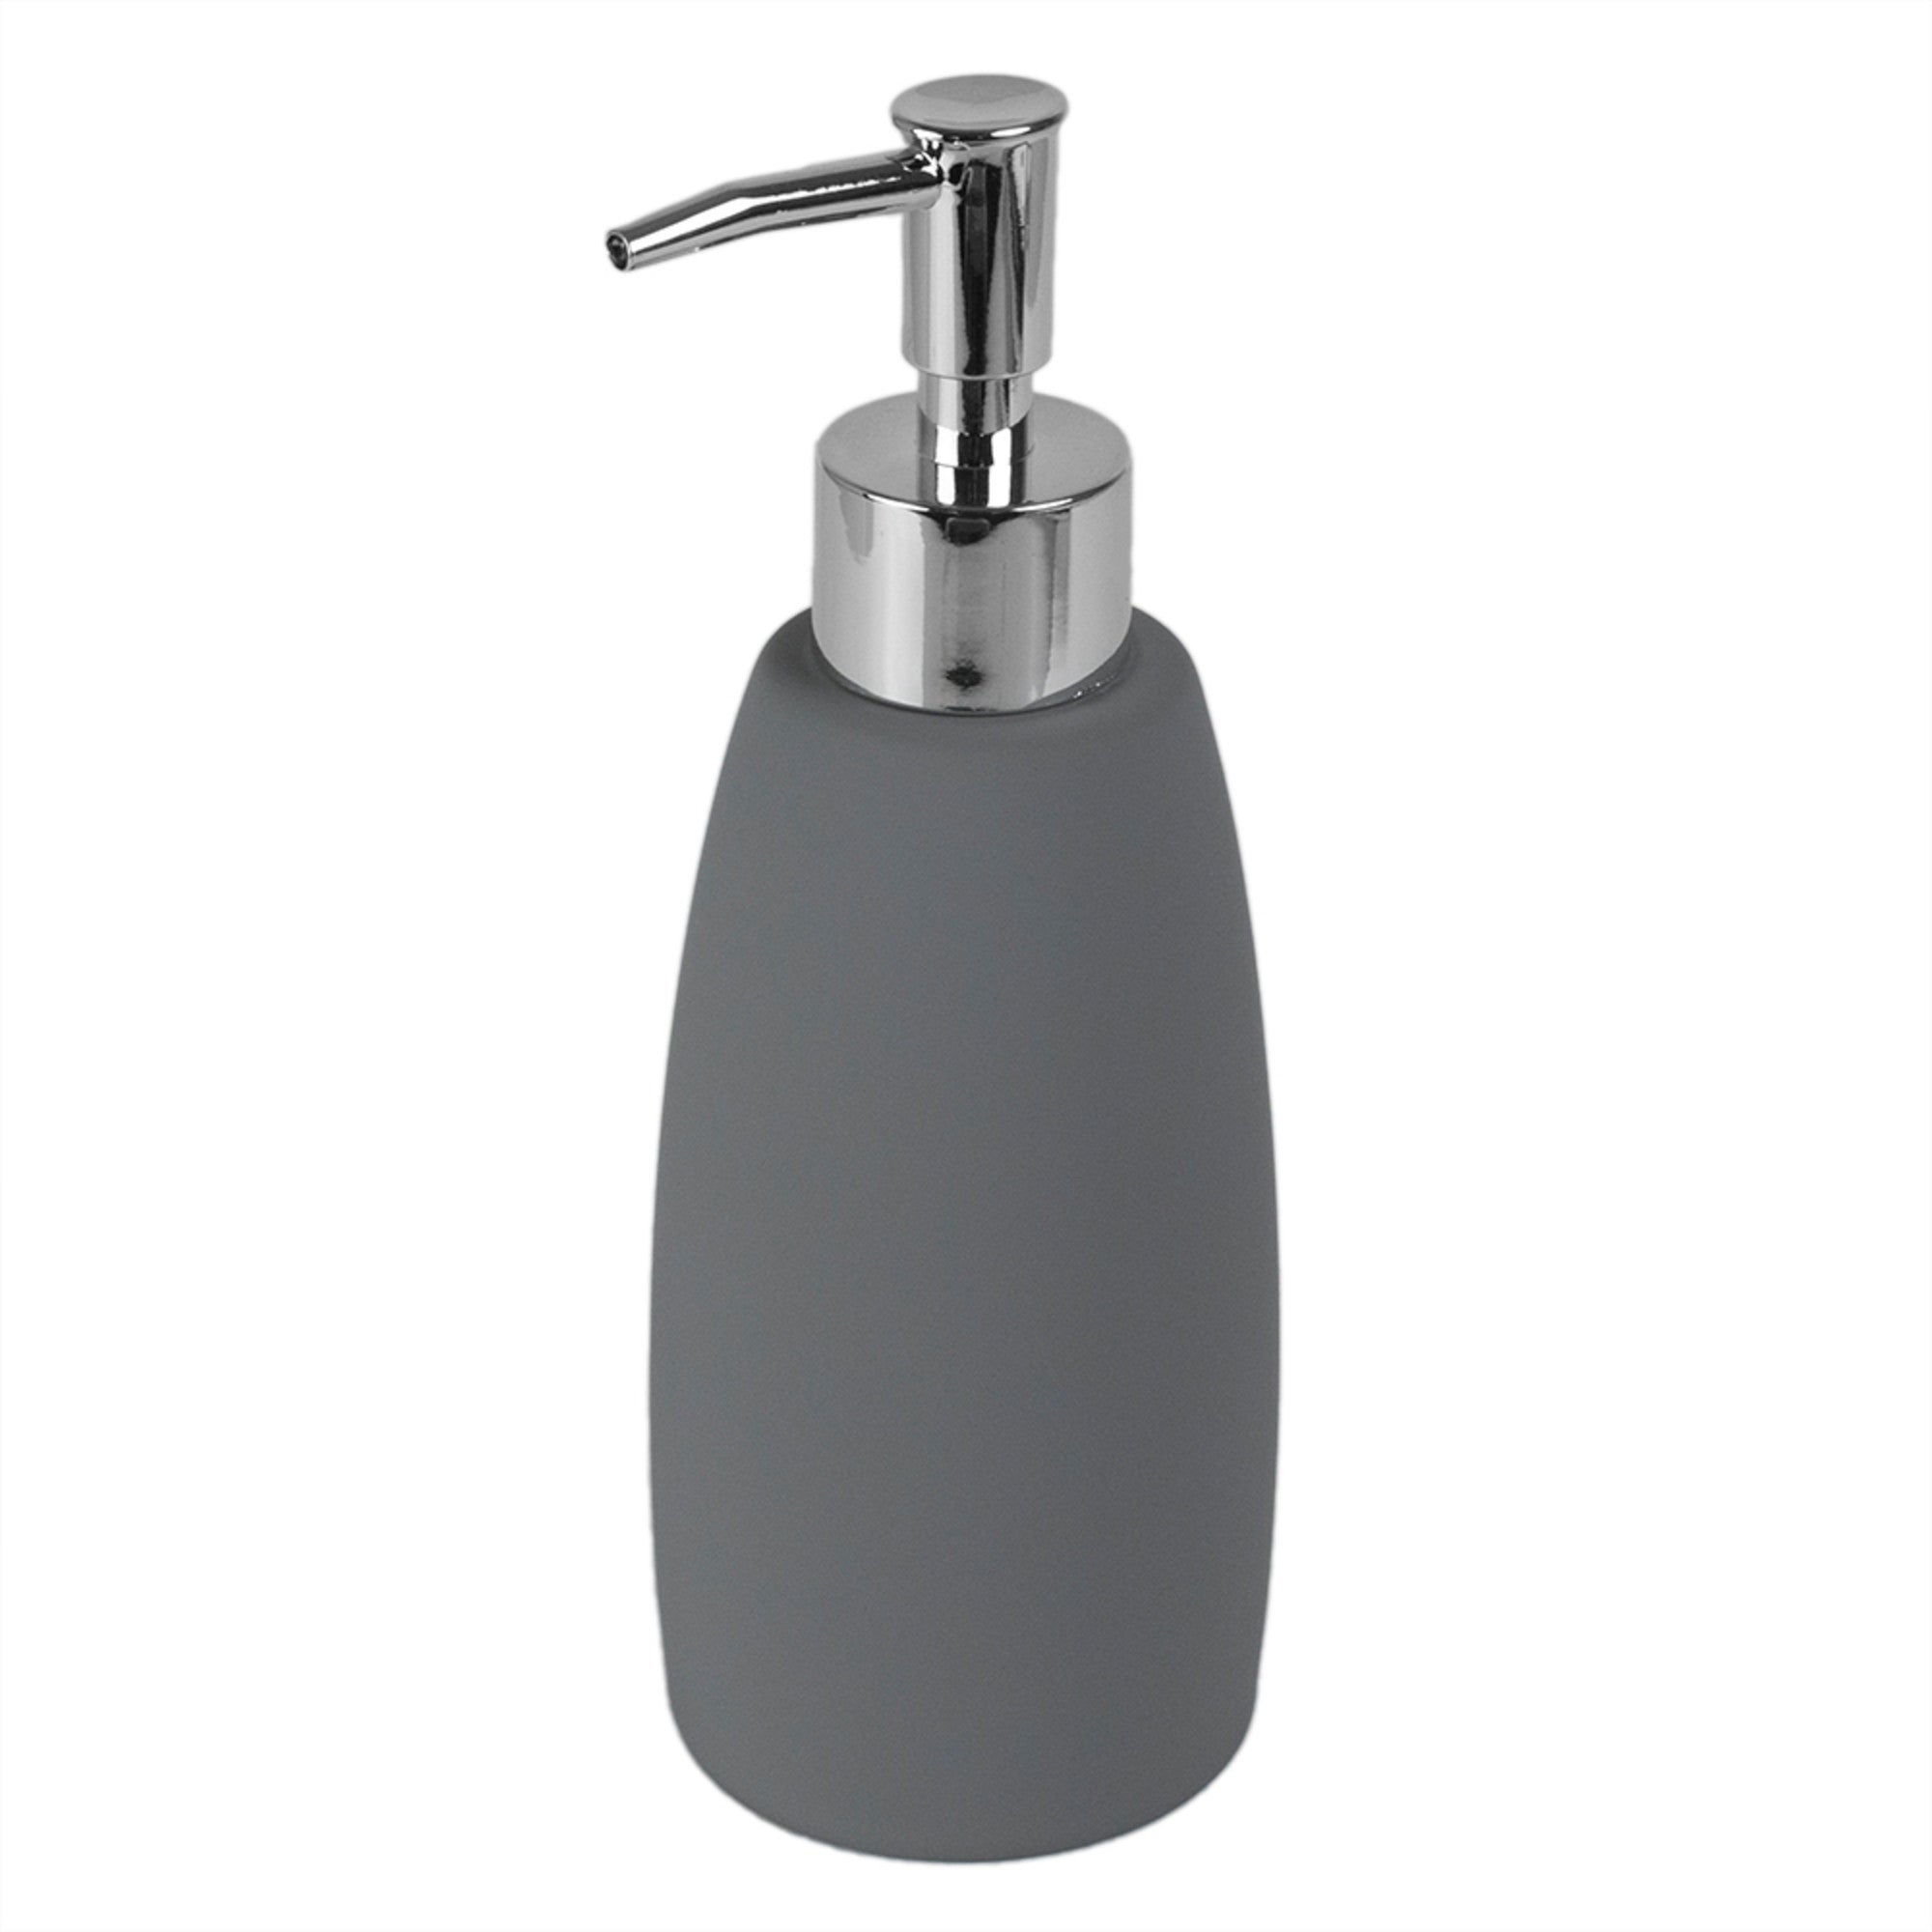 Home Basics Rubberized Ceramic Cylinder Soap Dispenser - Assorted Colors